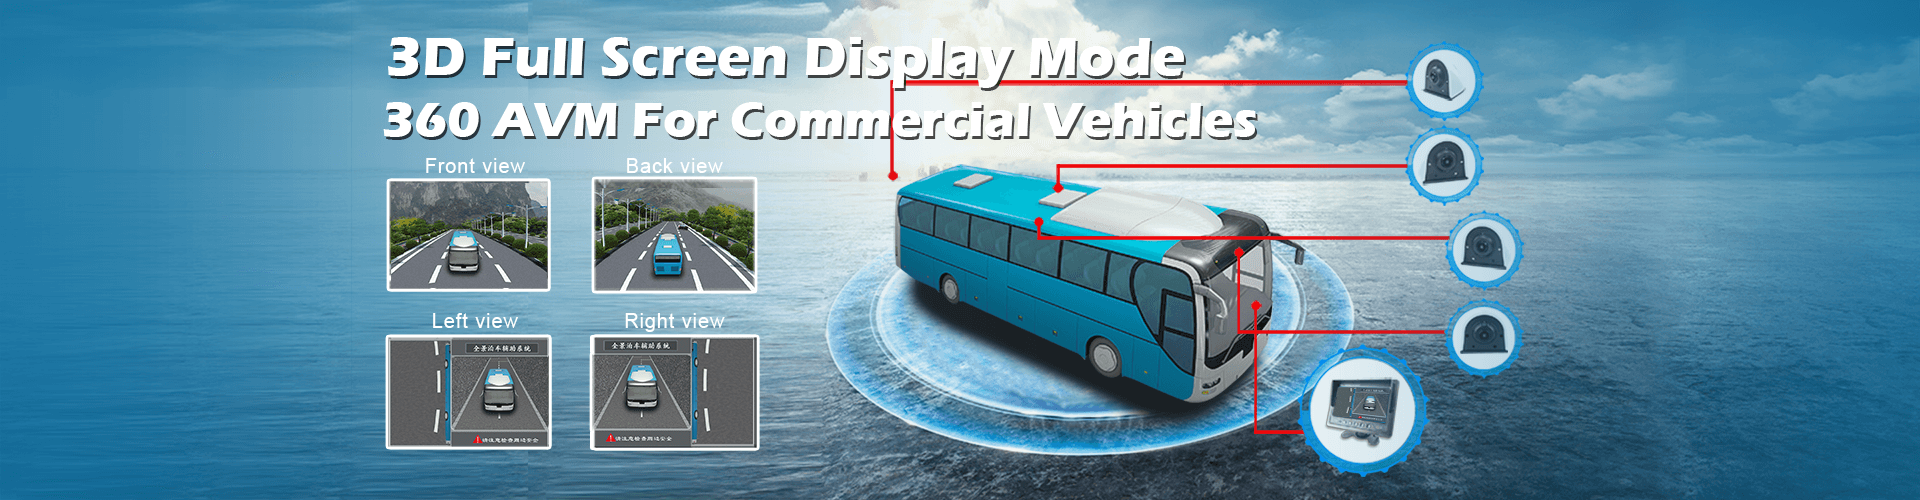 Sistema 360 3D AVM para veículos comerciais (van, RV, ônibus, ônibus, caminhões)